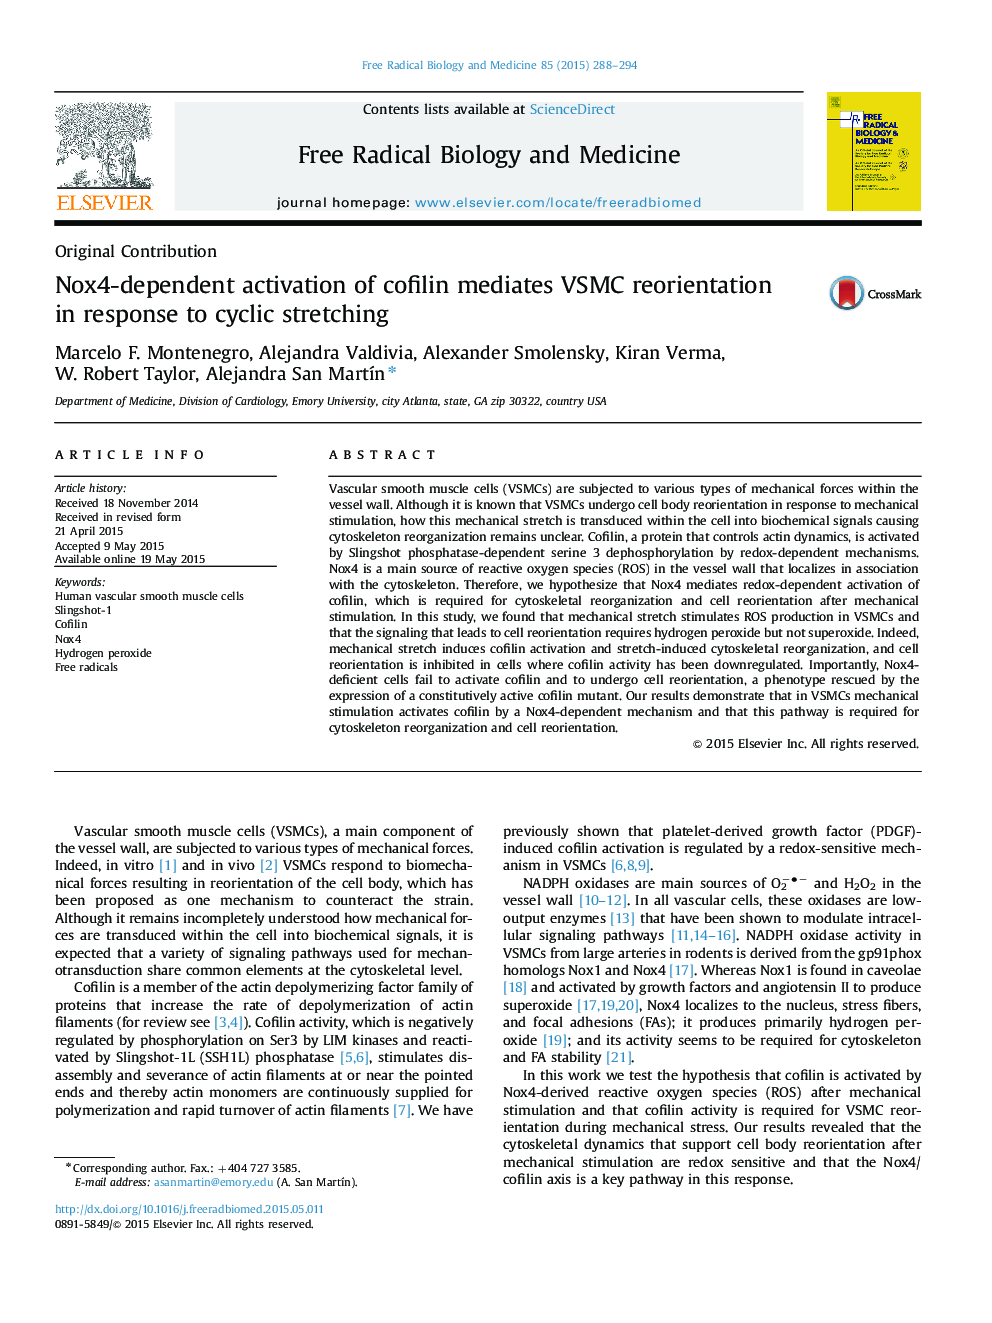 Nox4-dependent activation of cofilin mediates VSMC reorientation in response to cyclic stretching